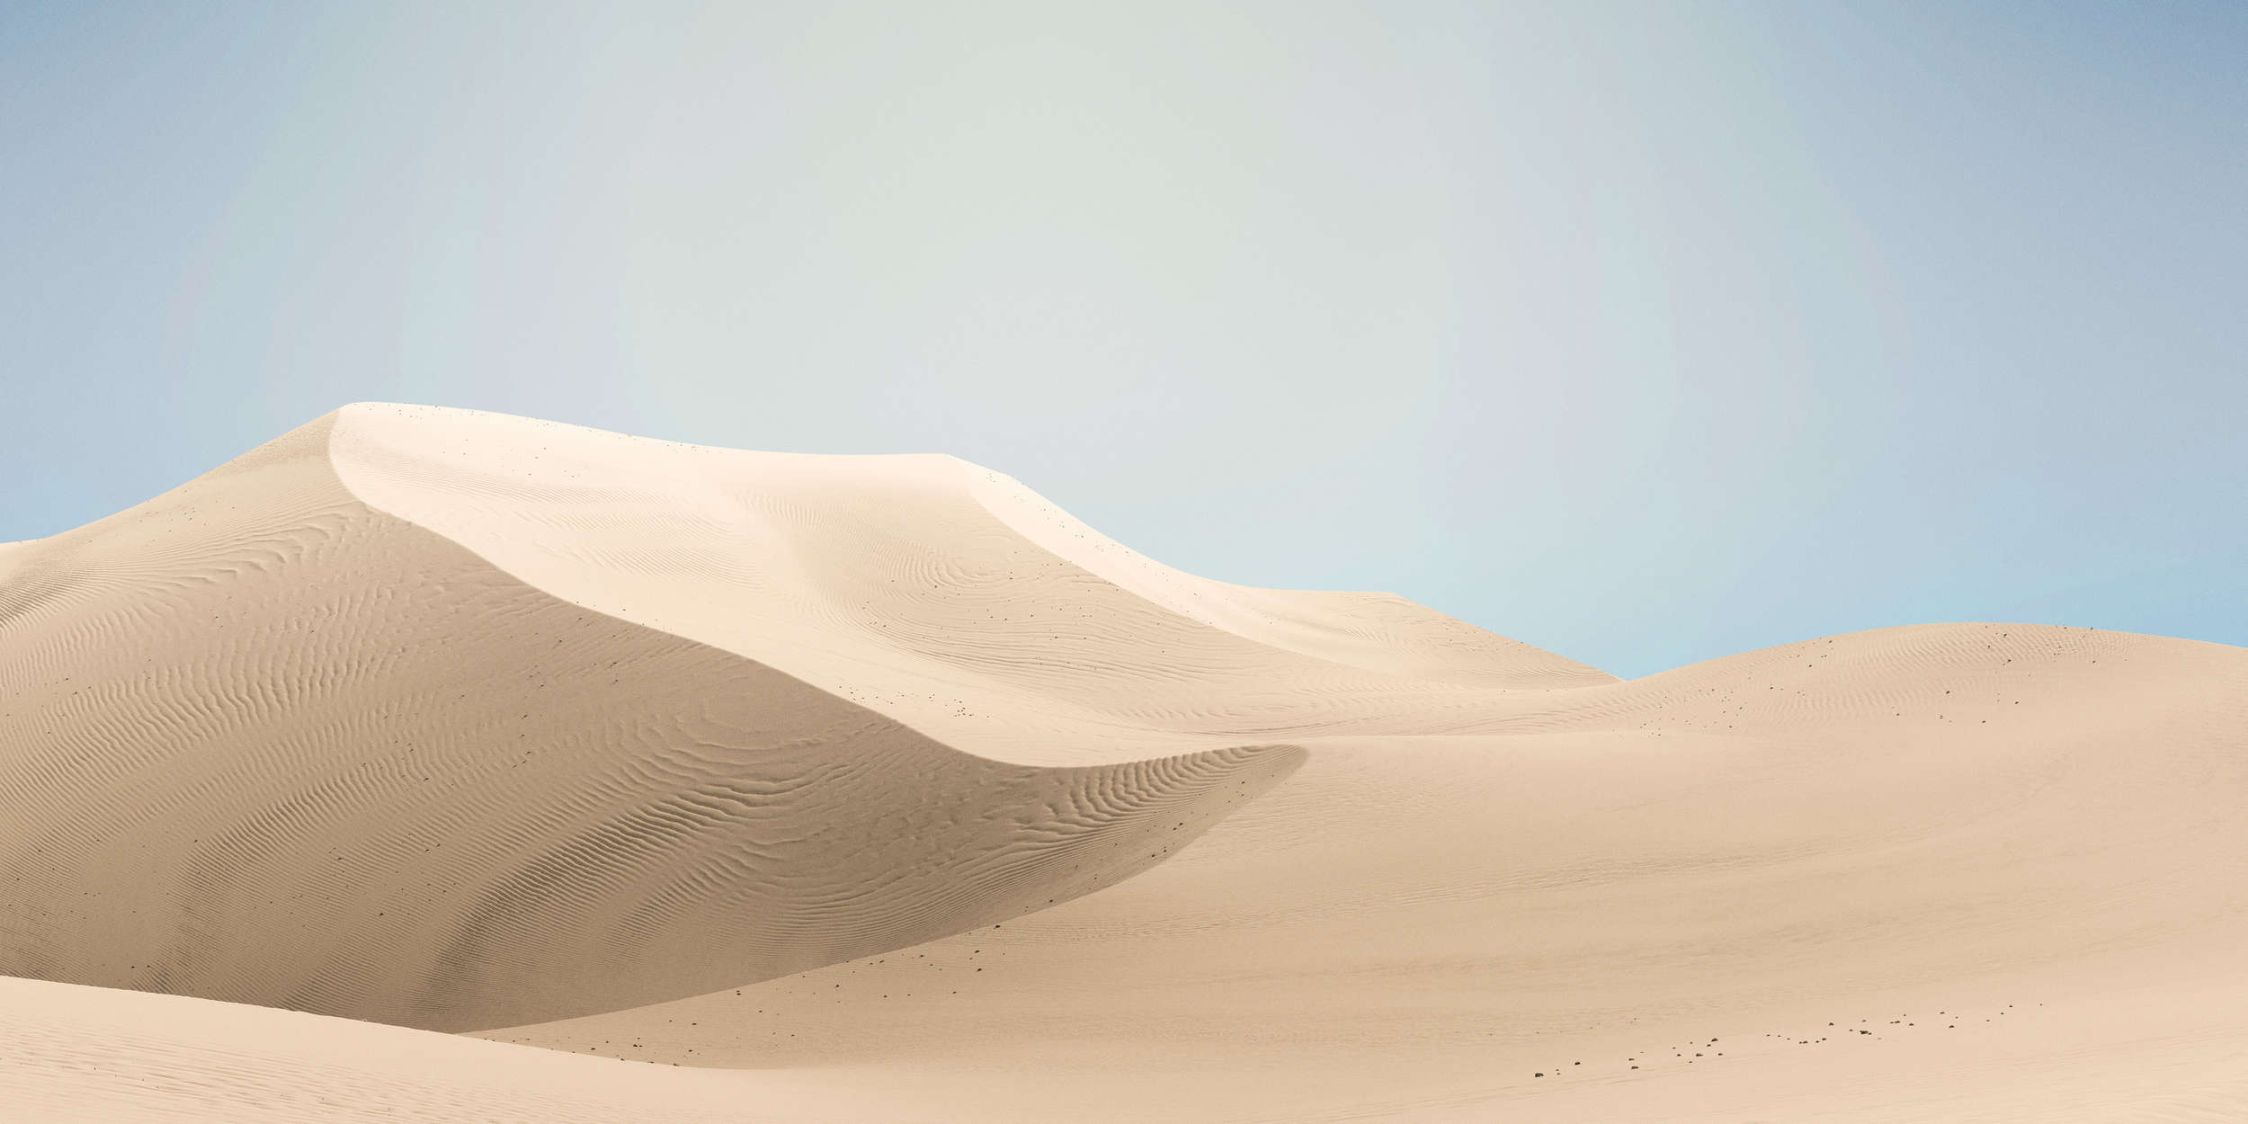             Fotomural »dunas« - Paisaje desértico en tonos pastel - Tela no tejida de textura ligera
        